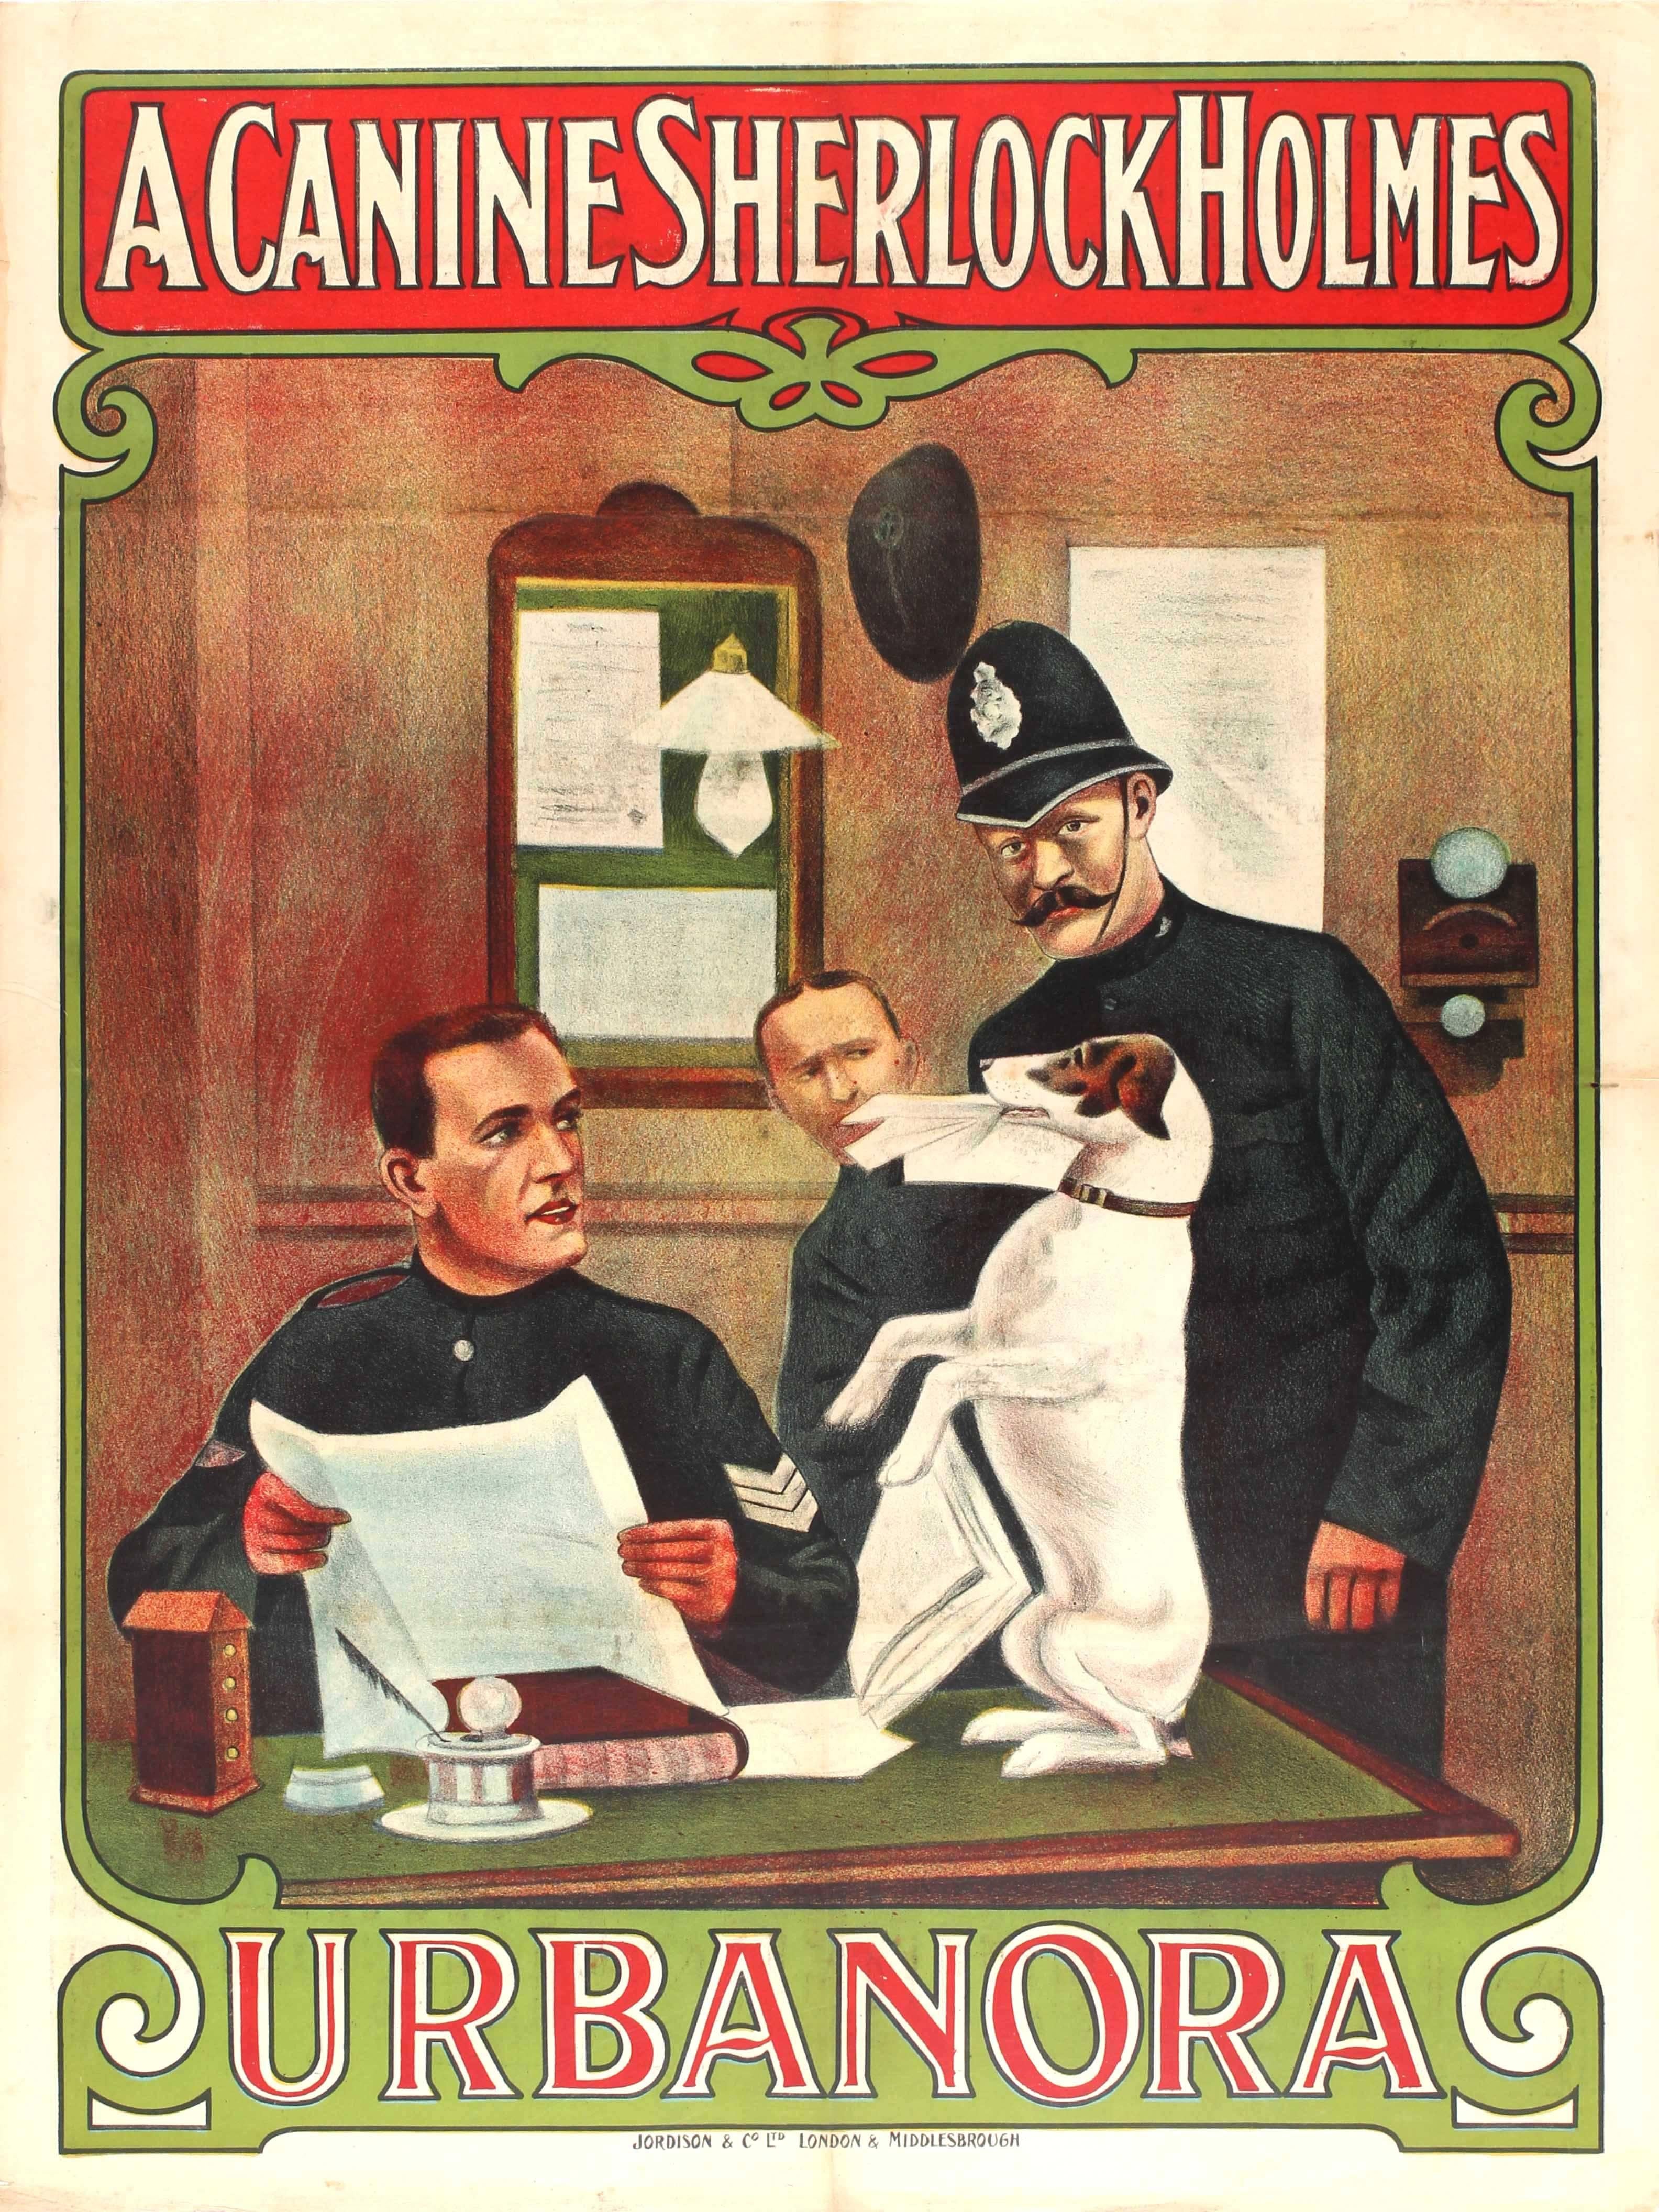 Unknown Print - Rare Original Film Poster - A Canine Sherlock Holmes Urbanora The Dog Detective